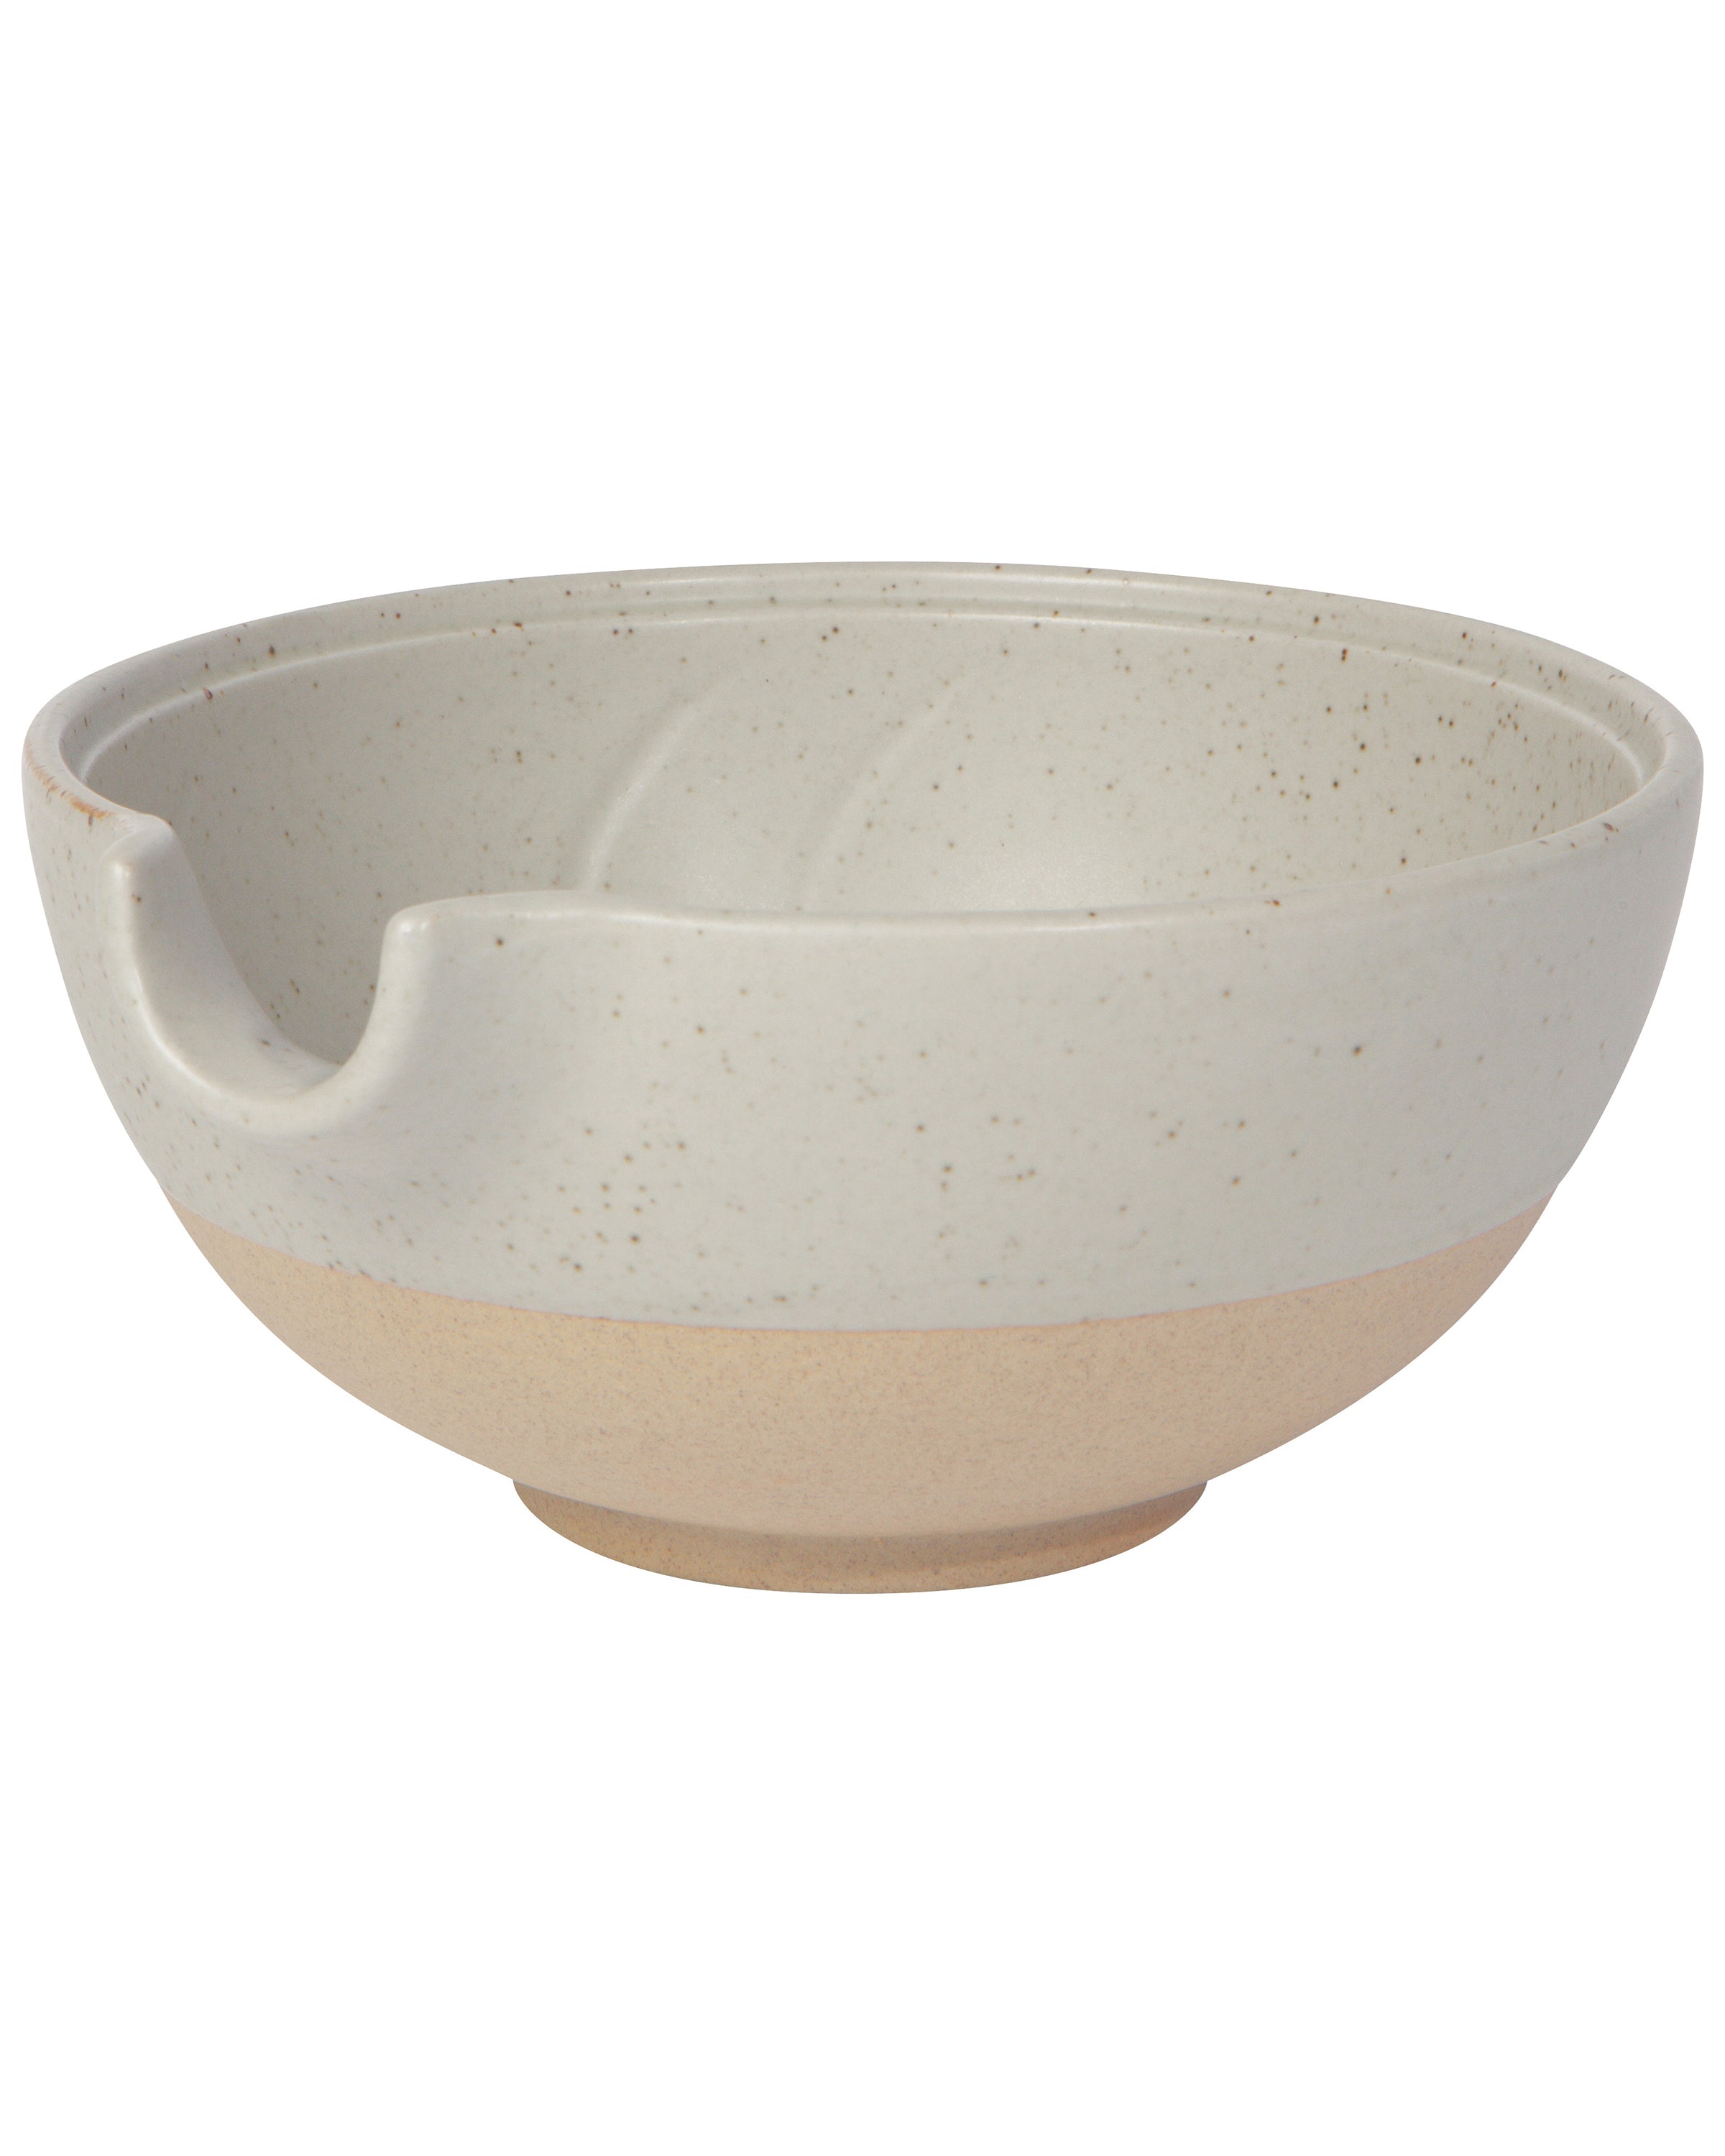 Danica Designs Maison Medium Element Mixing Bowl in Gray